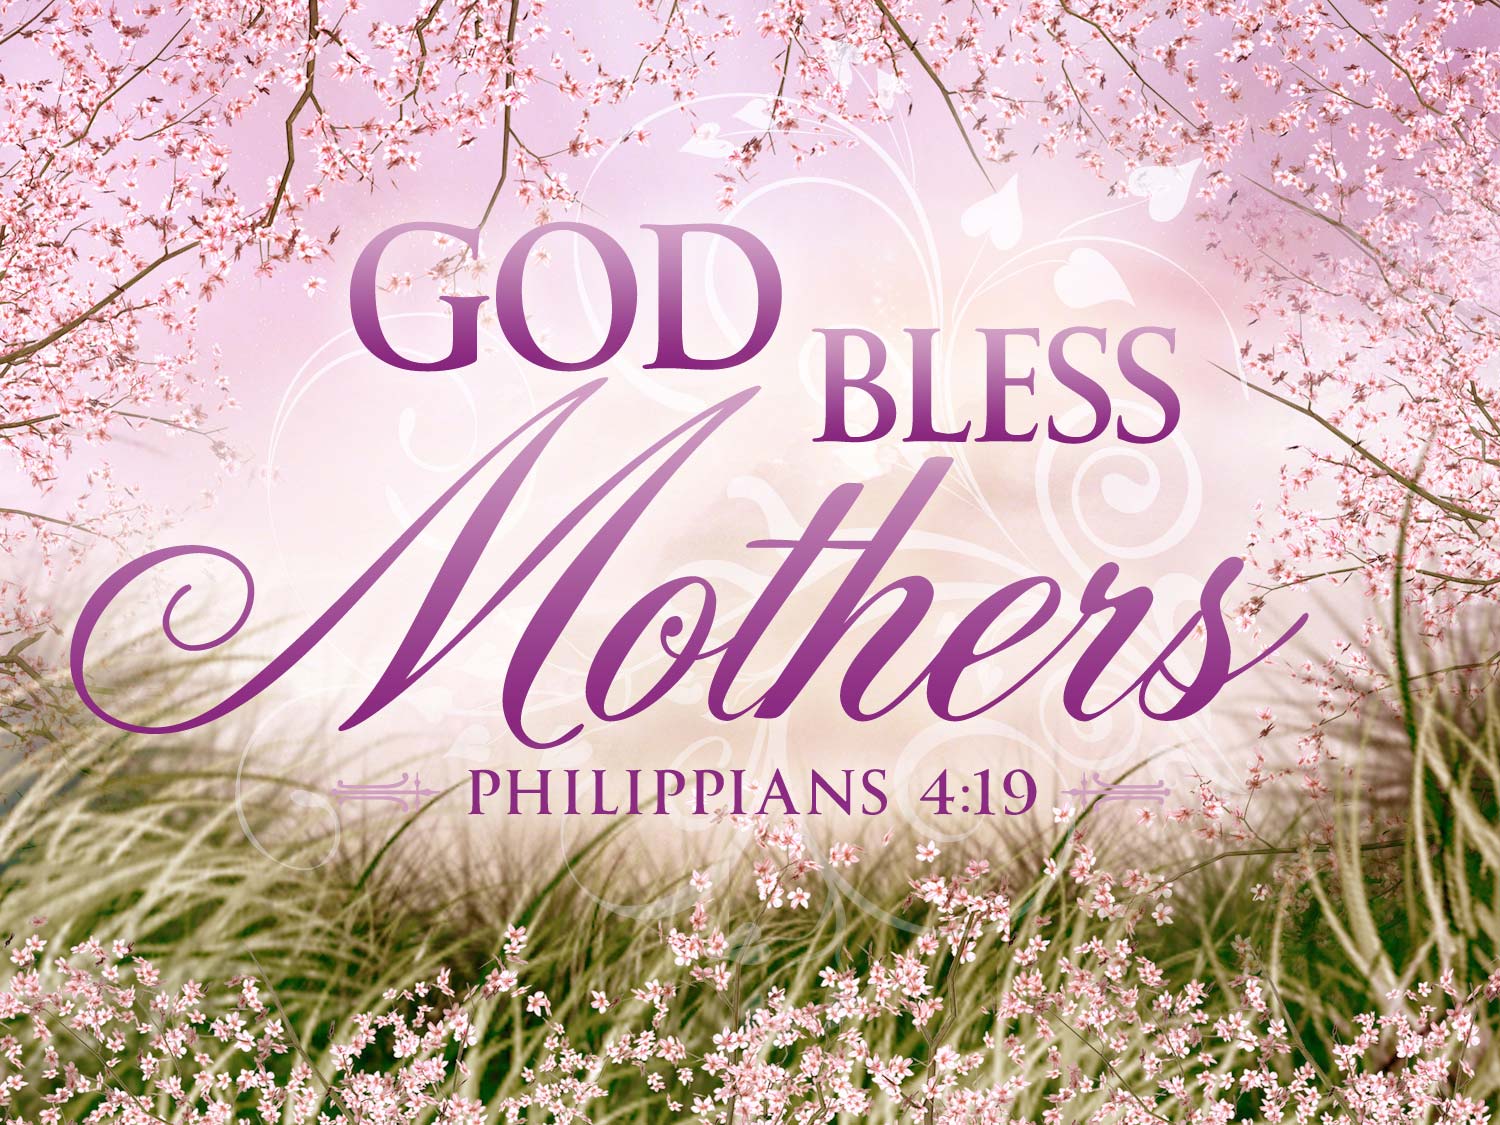 Happy Mothers Day art phillipians 4.19 for blog